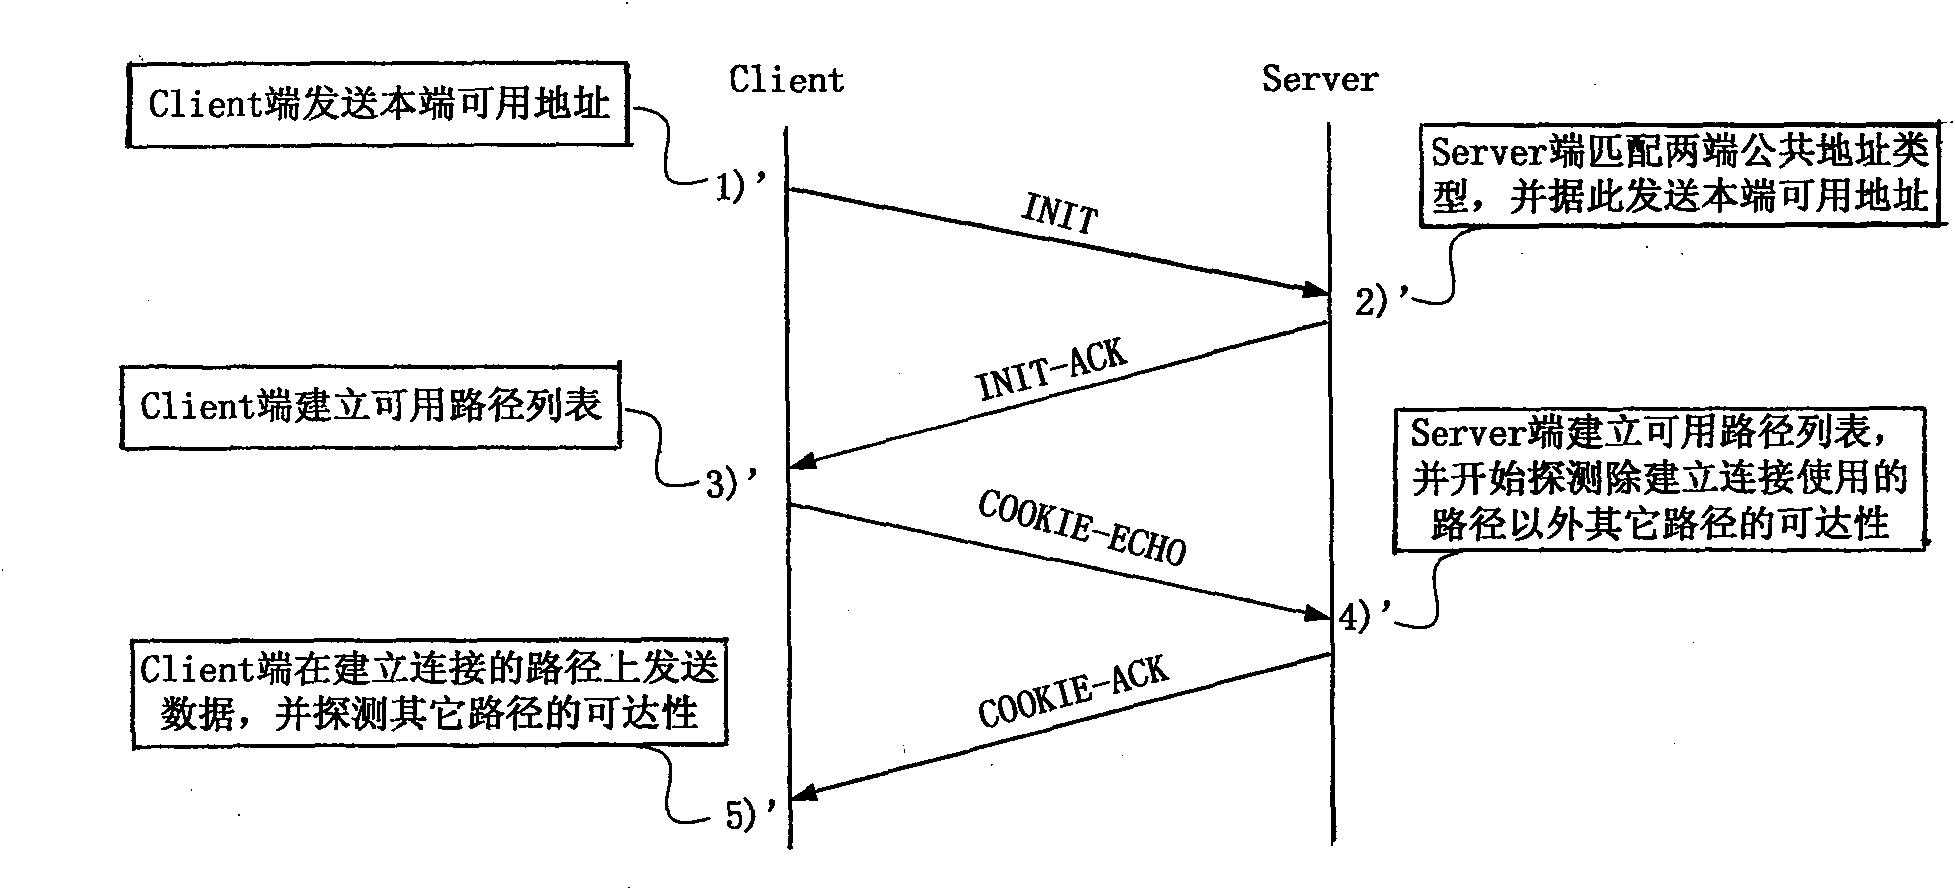 Multipath cocurrent transmission method based on SCTP (Stream Control Transmission Protocol)